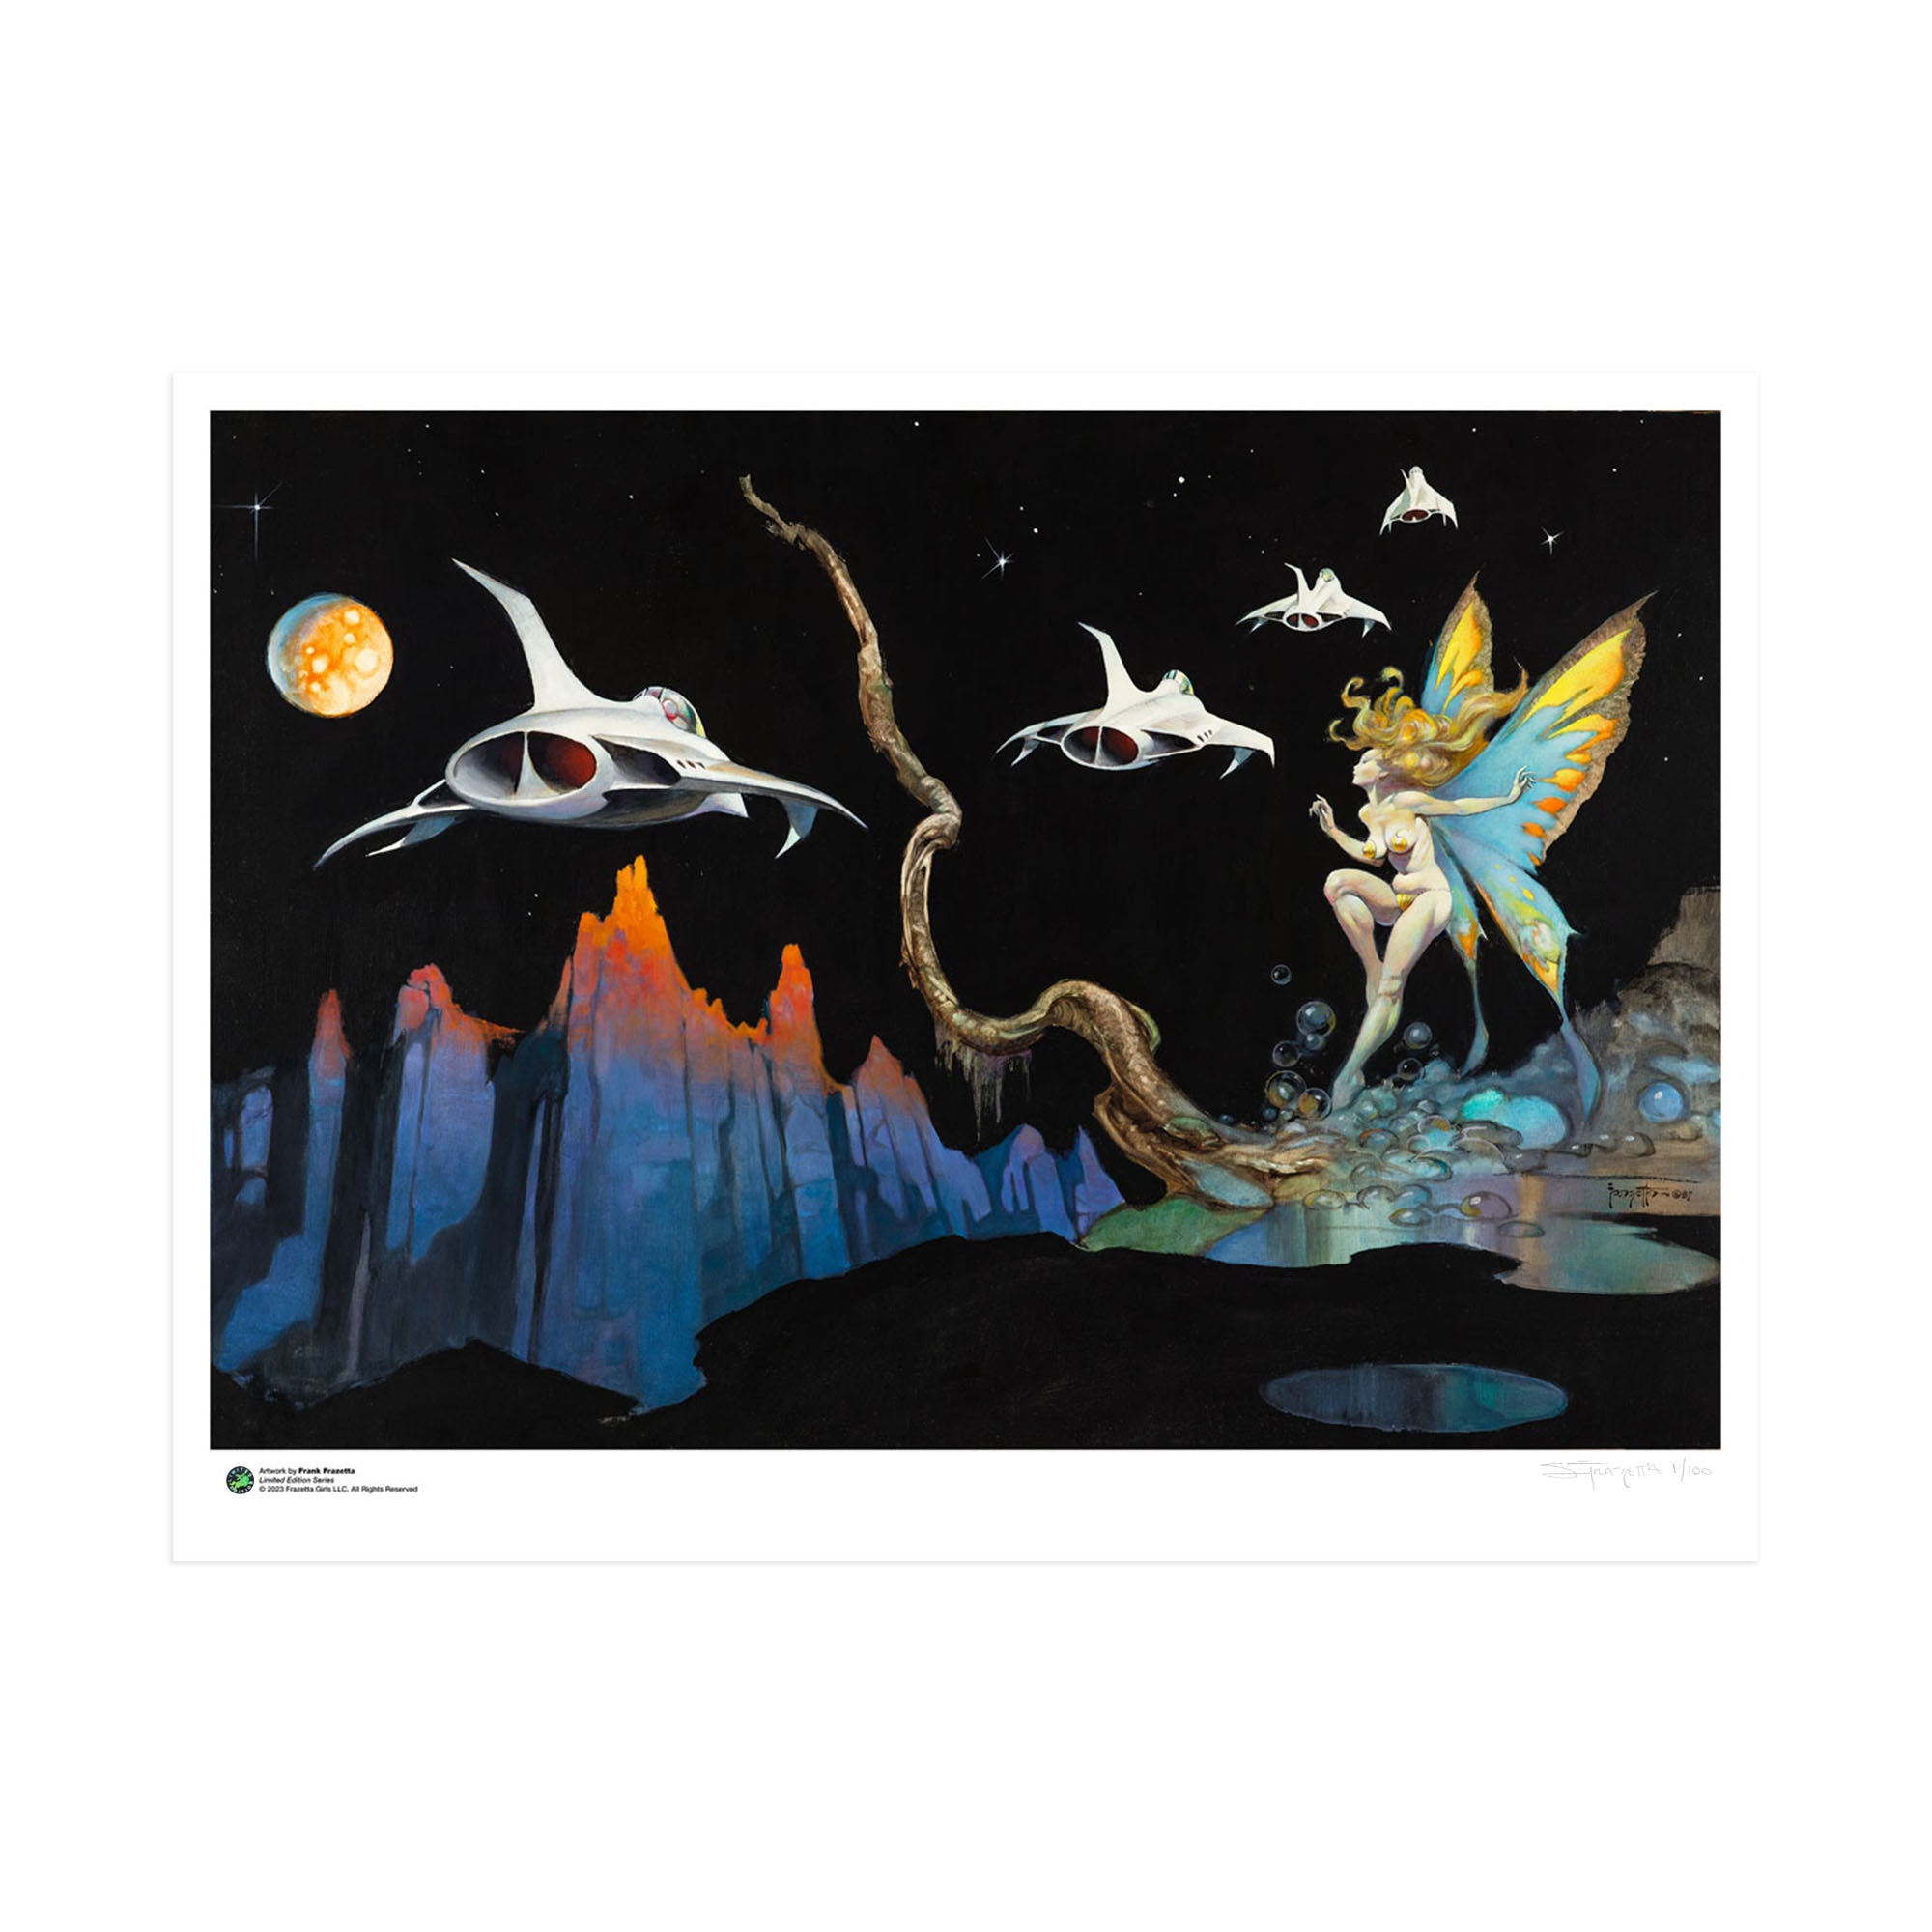 Frank Frazetta 'Dream Flight' Limited Edition Giclée